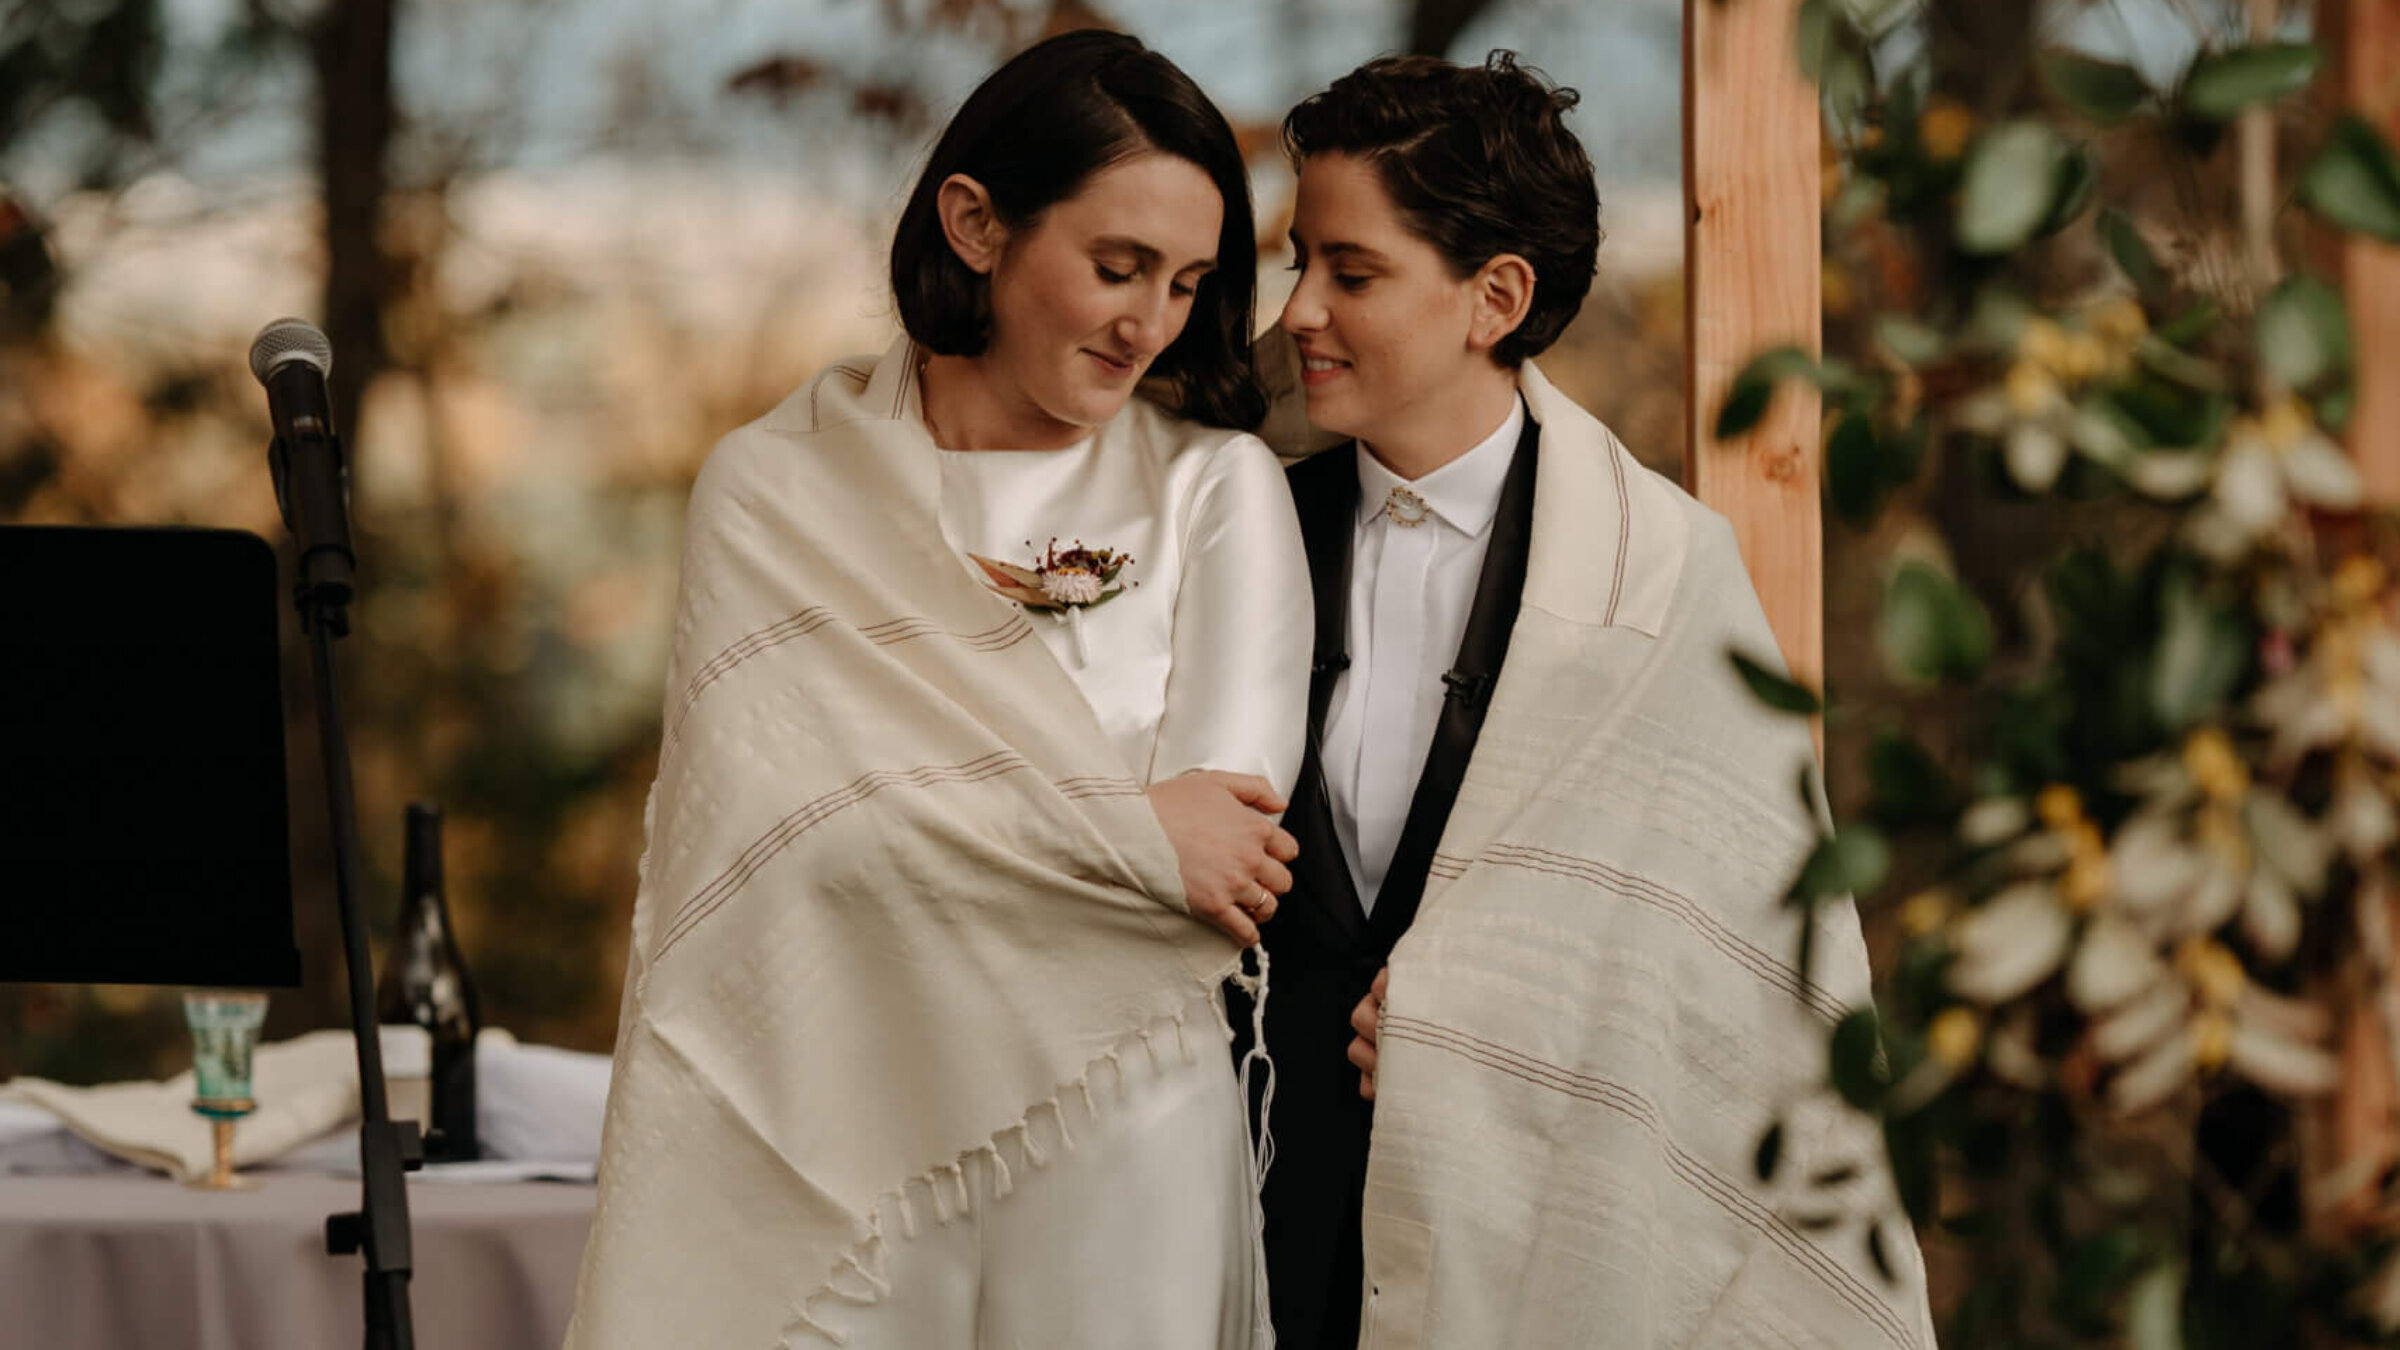 Tamar Lindenbaum, left, and Sabina Tilevitz pose for a wedding photo.